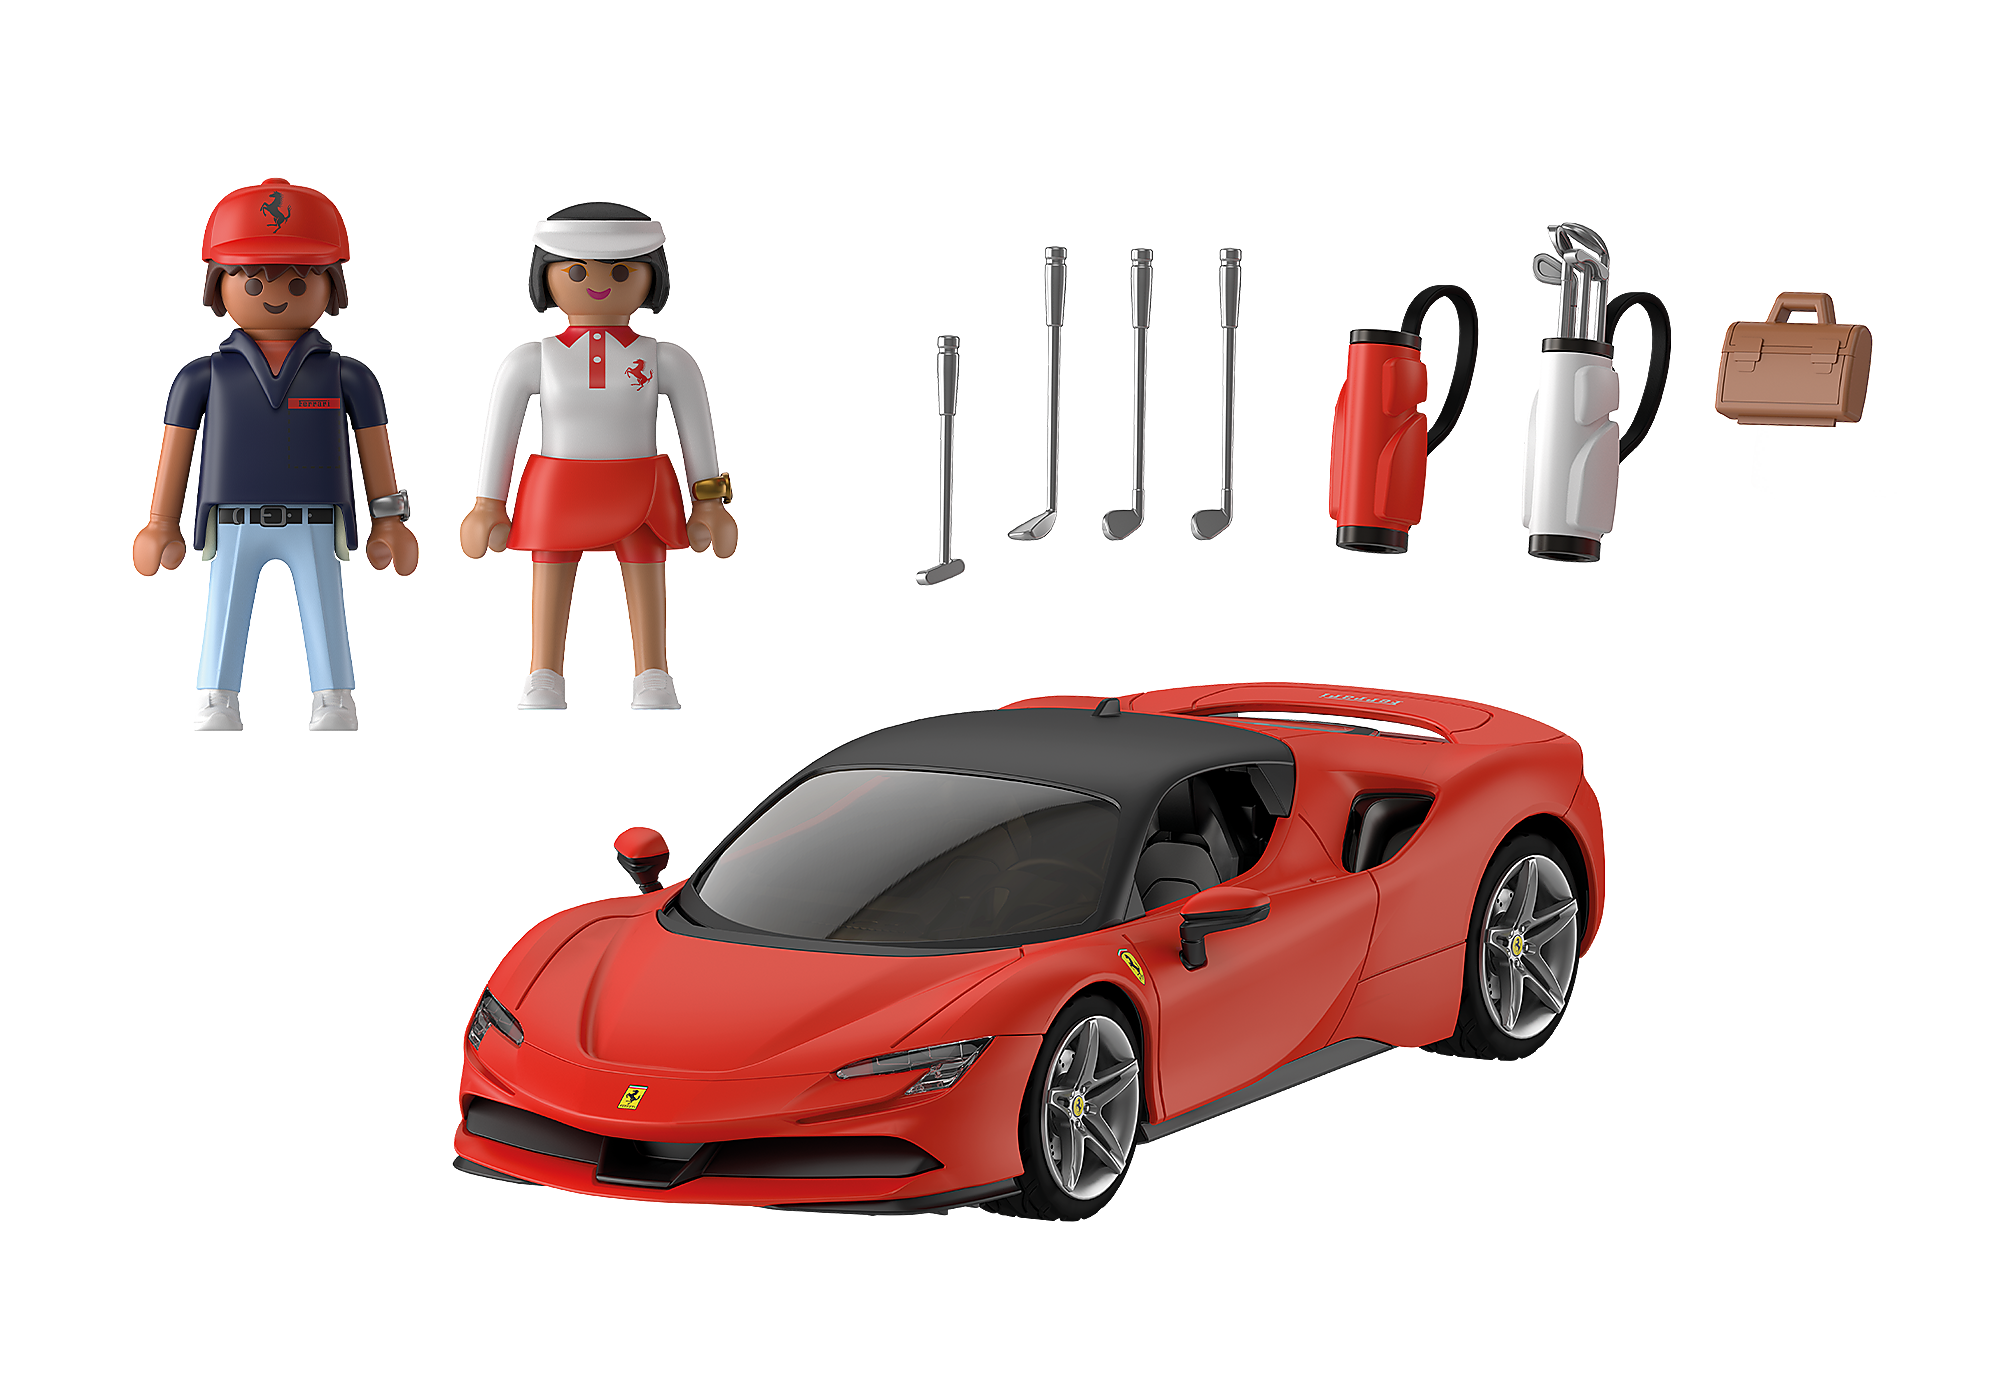 Köp Liten leksaksbil Playmobil Ferrari SF90 Stradale. Billig leverans